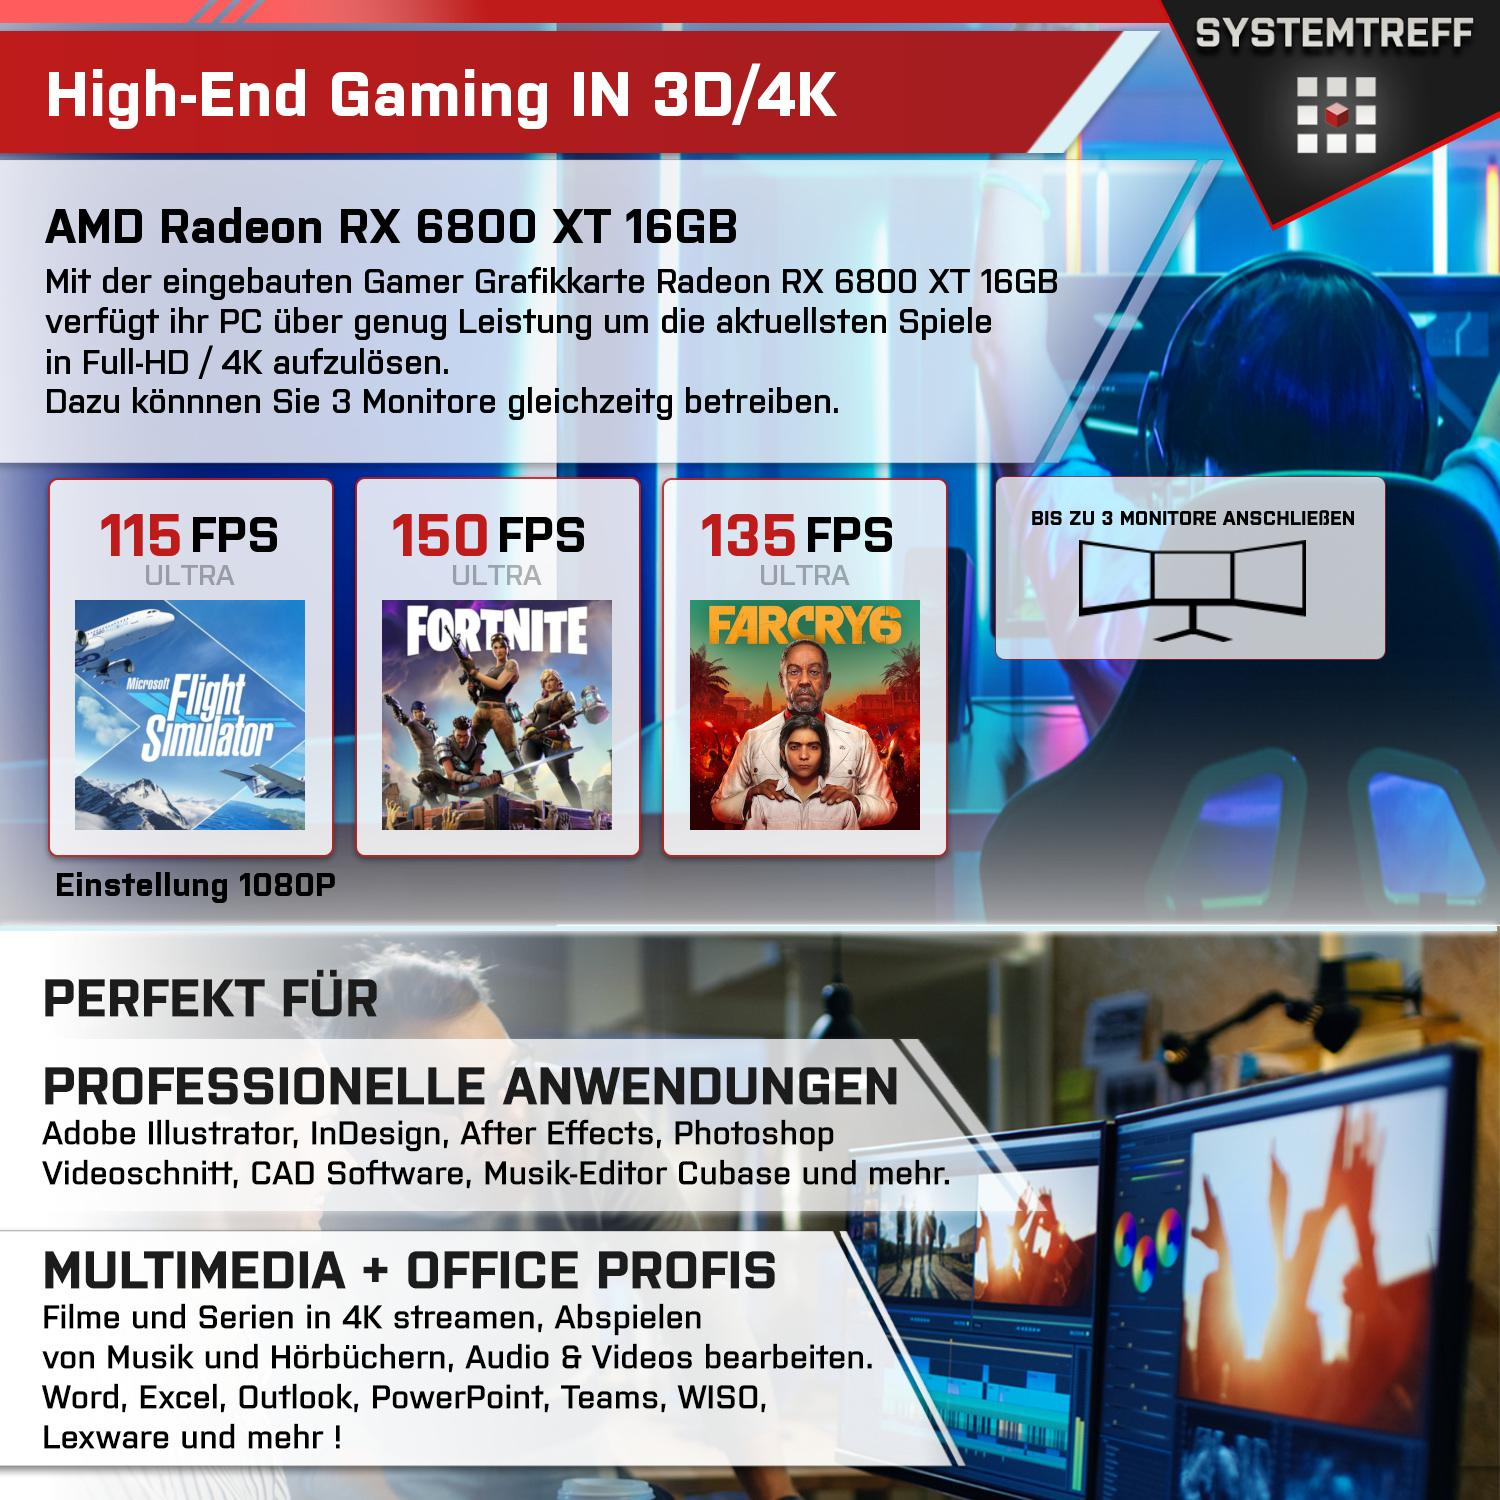 XT mit 7 GB 7 AMD Windows GB Prozessor, High-End Ryzen Pro, Radeon™ RAM, 6800 SYSTEMTREFF 7800X3D, AMD Gaming mSSD, 32 RX Ryzen™ 1000 11 Gaming PC AMD